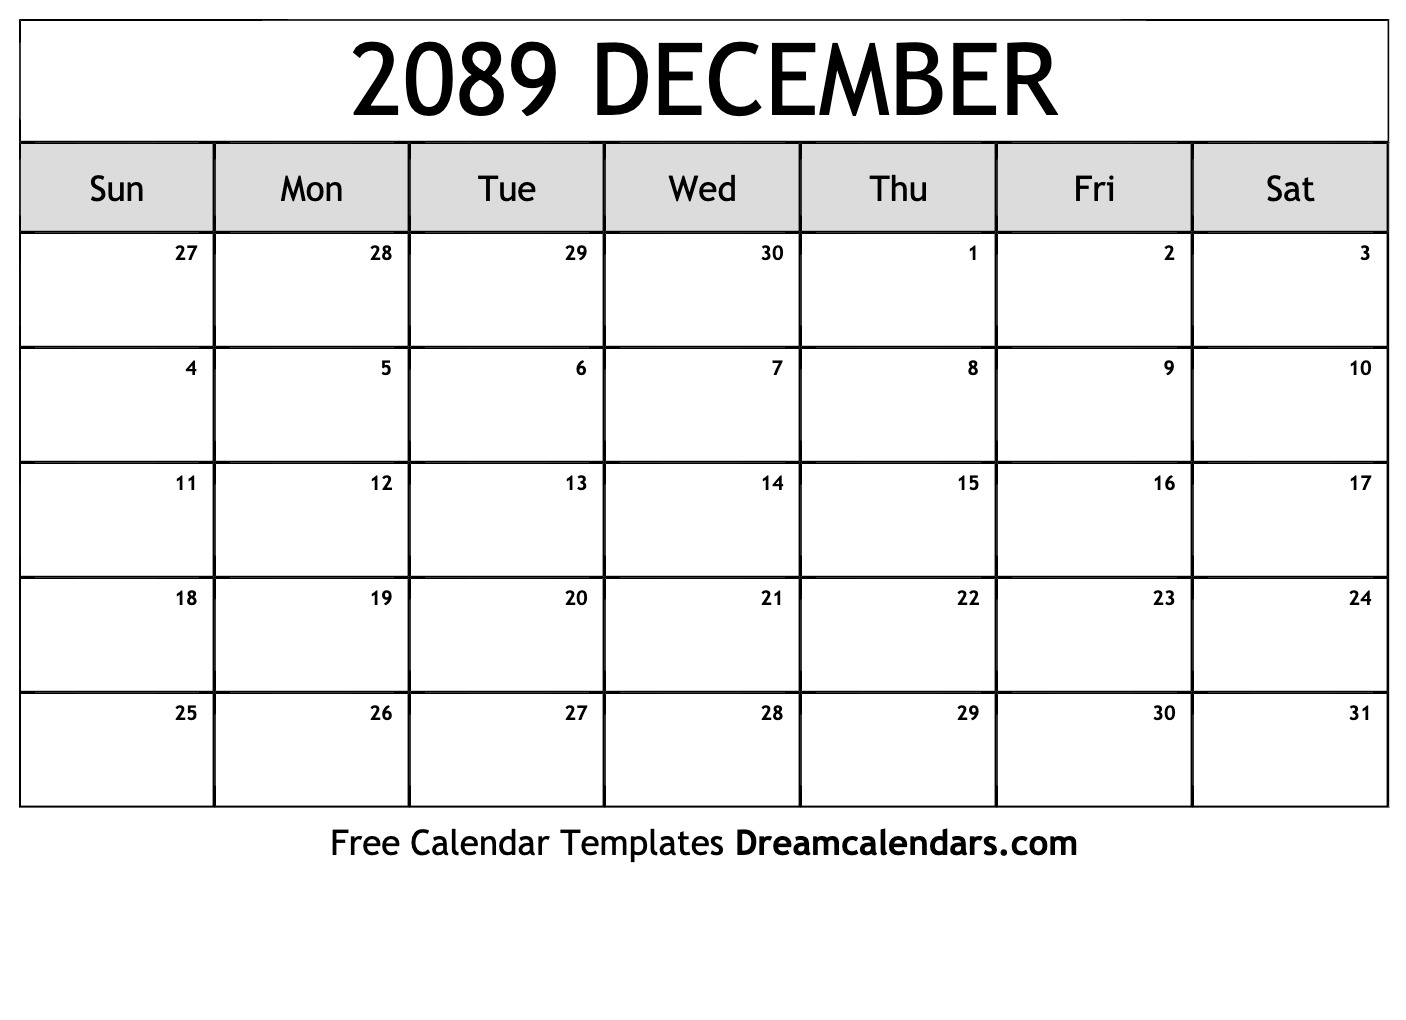 December 2089 Calendar Free Blank Printable With Holidays